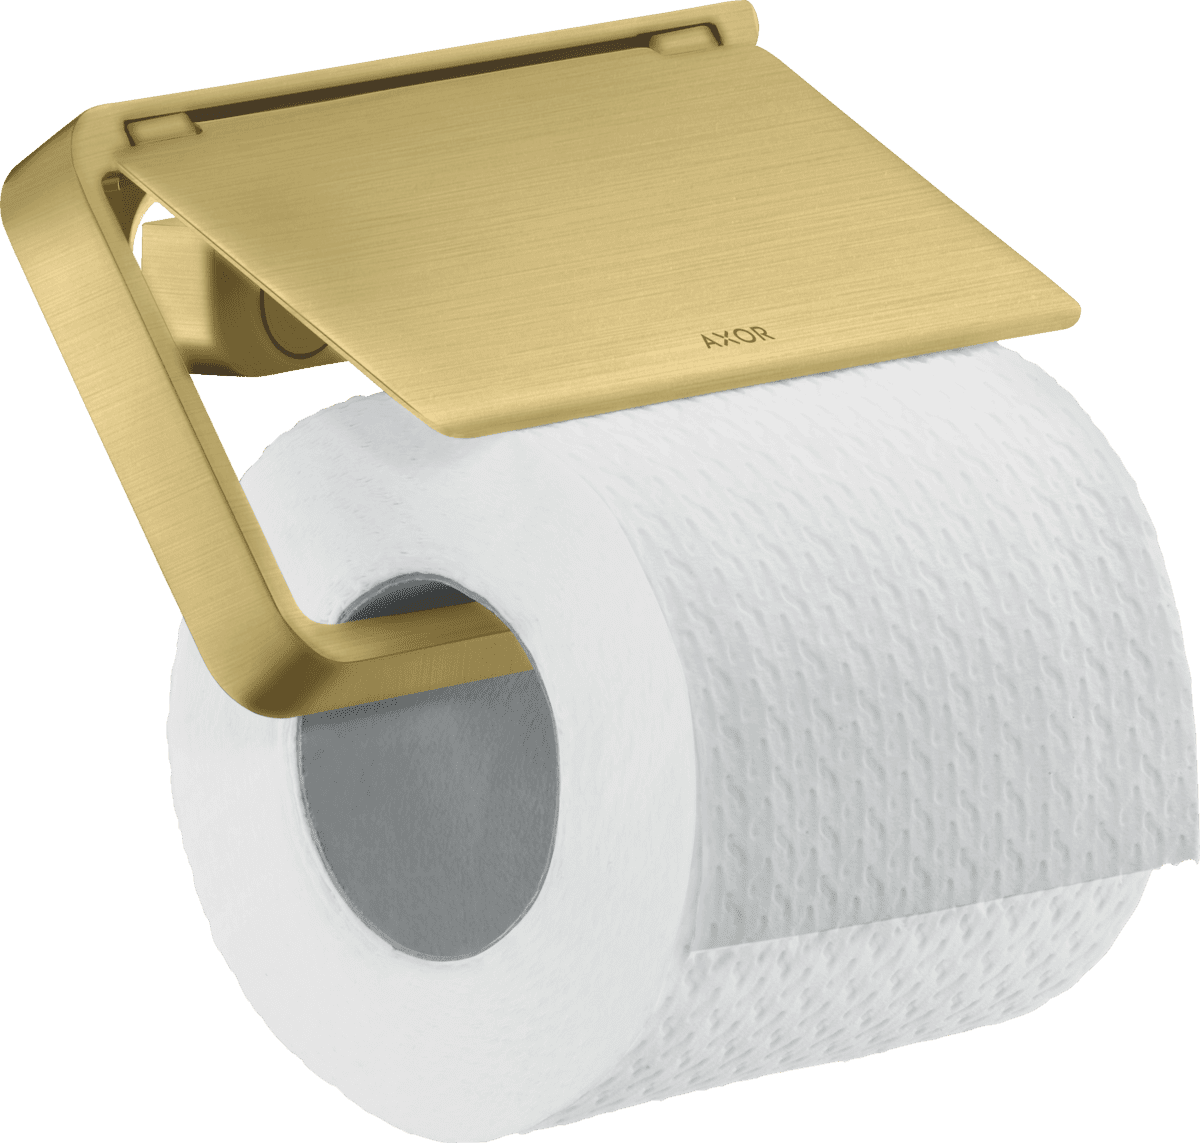 HANSGROHE AXOR Universal Softsquare Tuvalet kağıtlığı kapaklı #42836950 - Mat Pirinç resmi